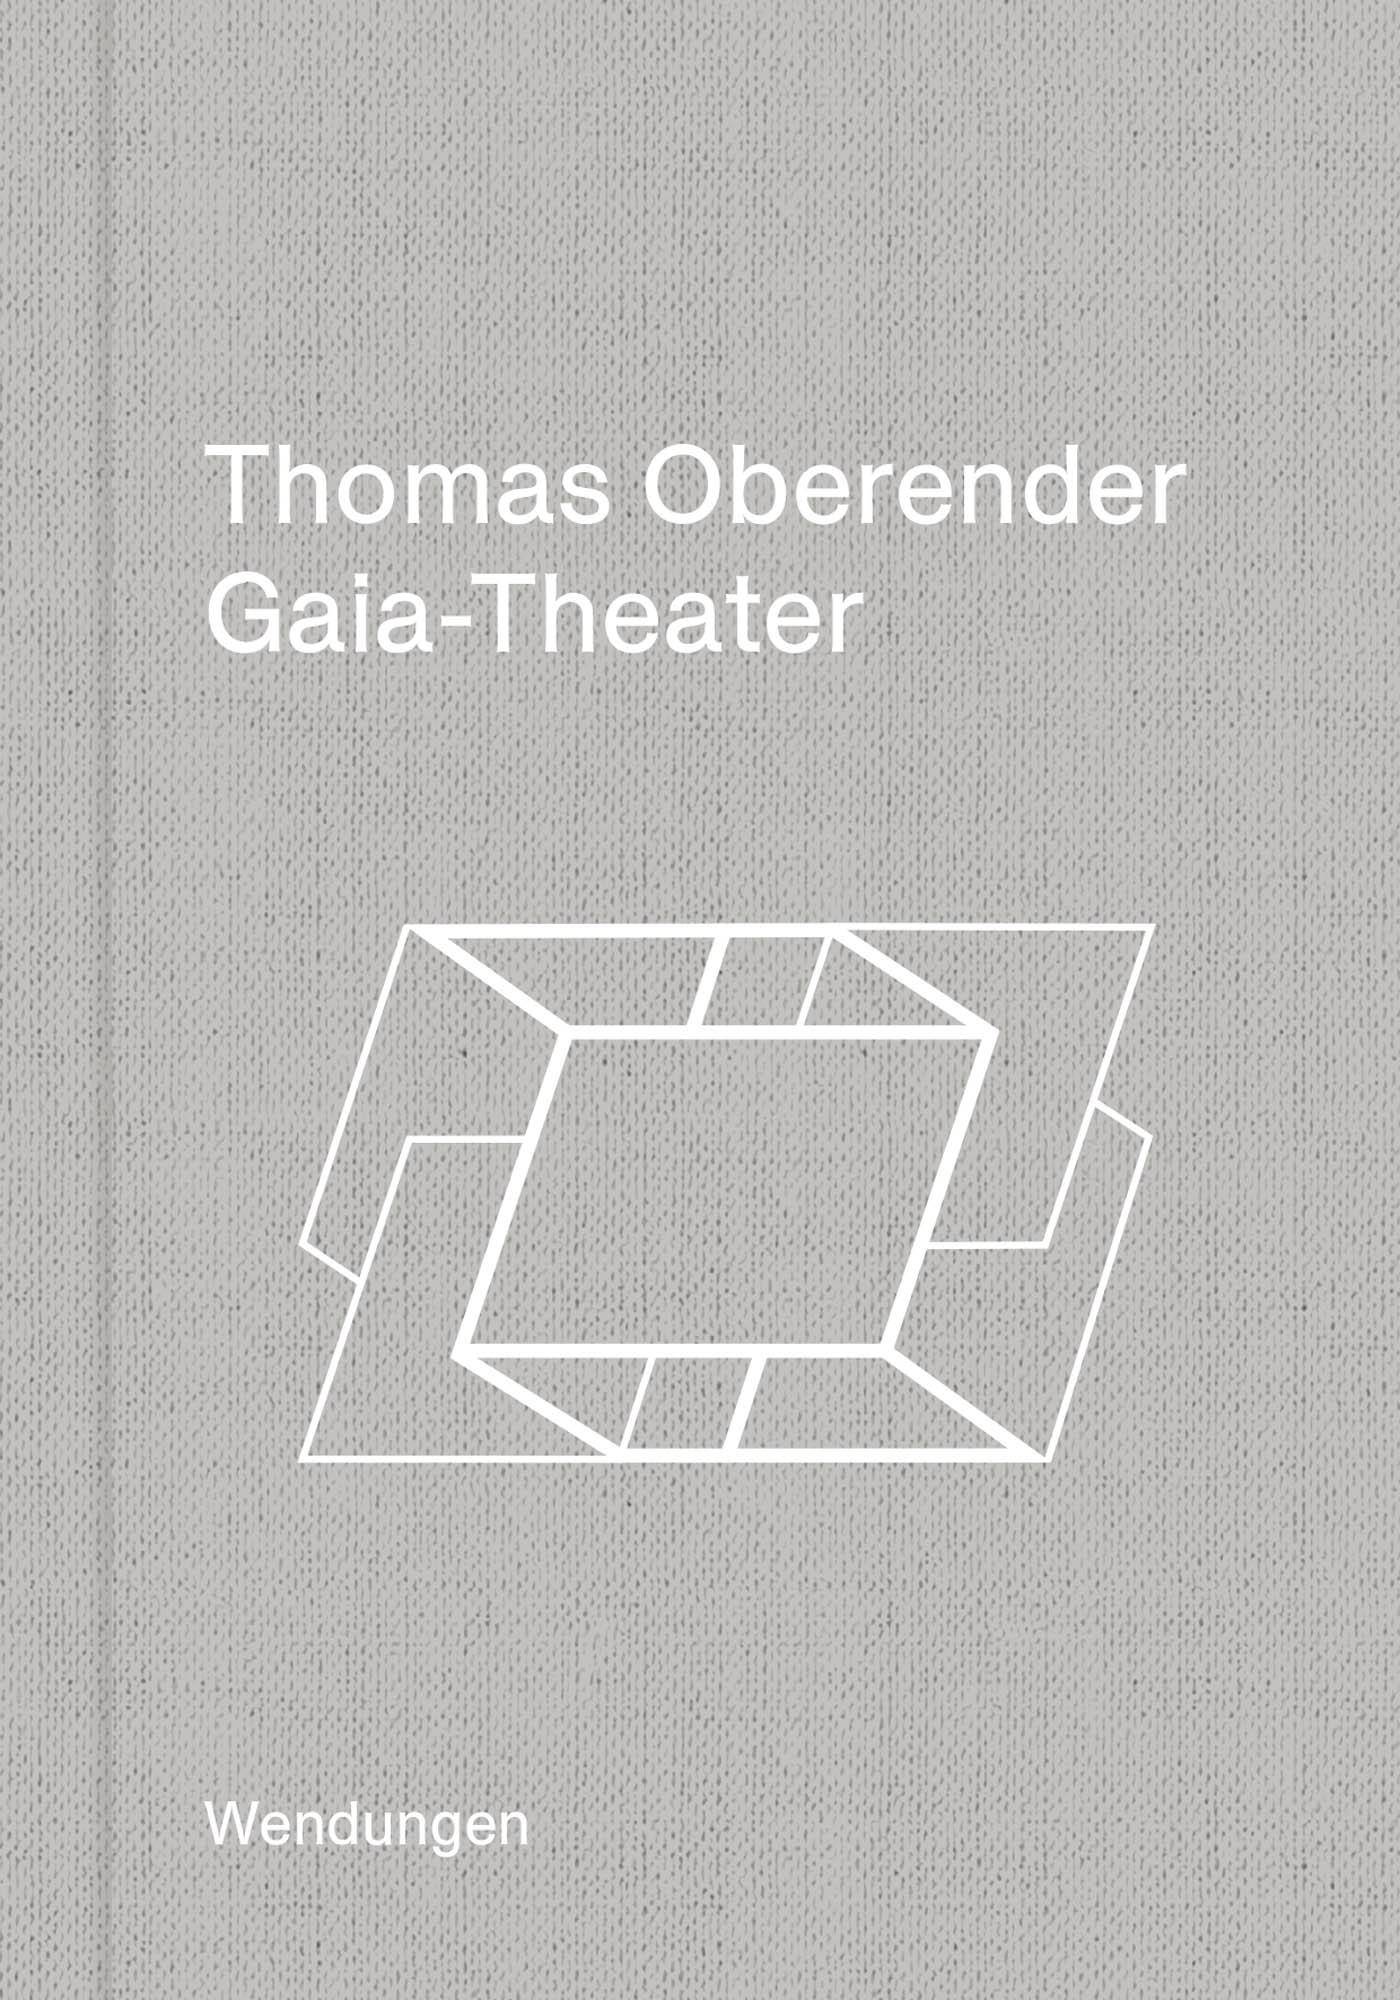 "Gaia-Theater"